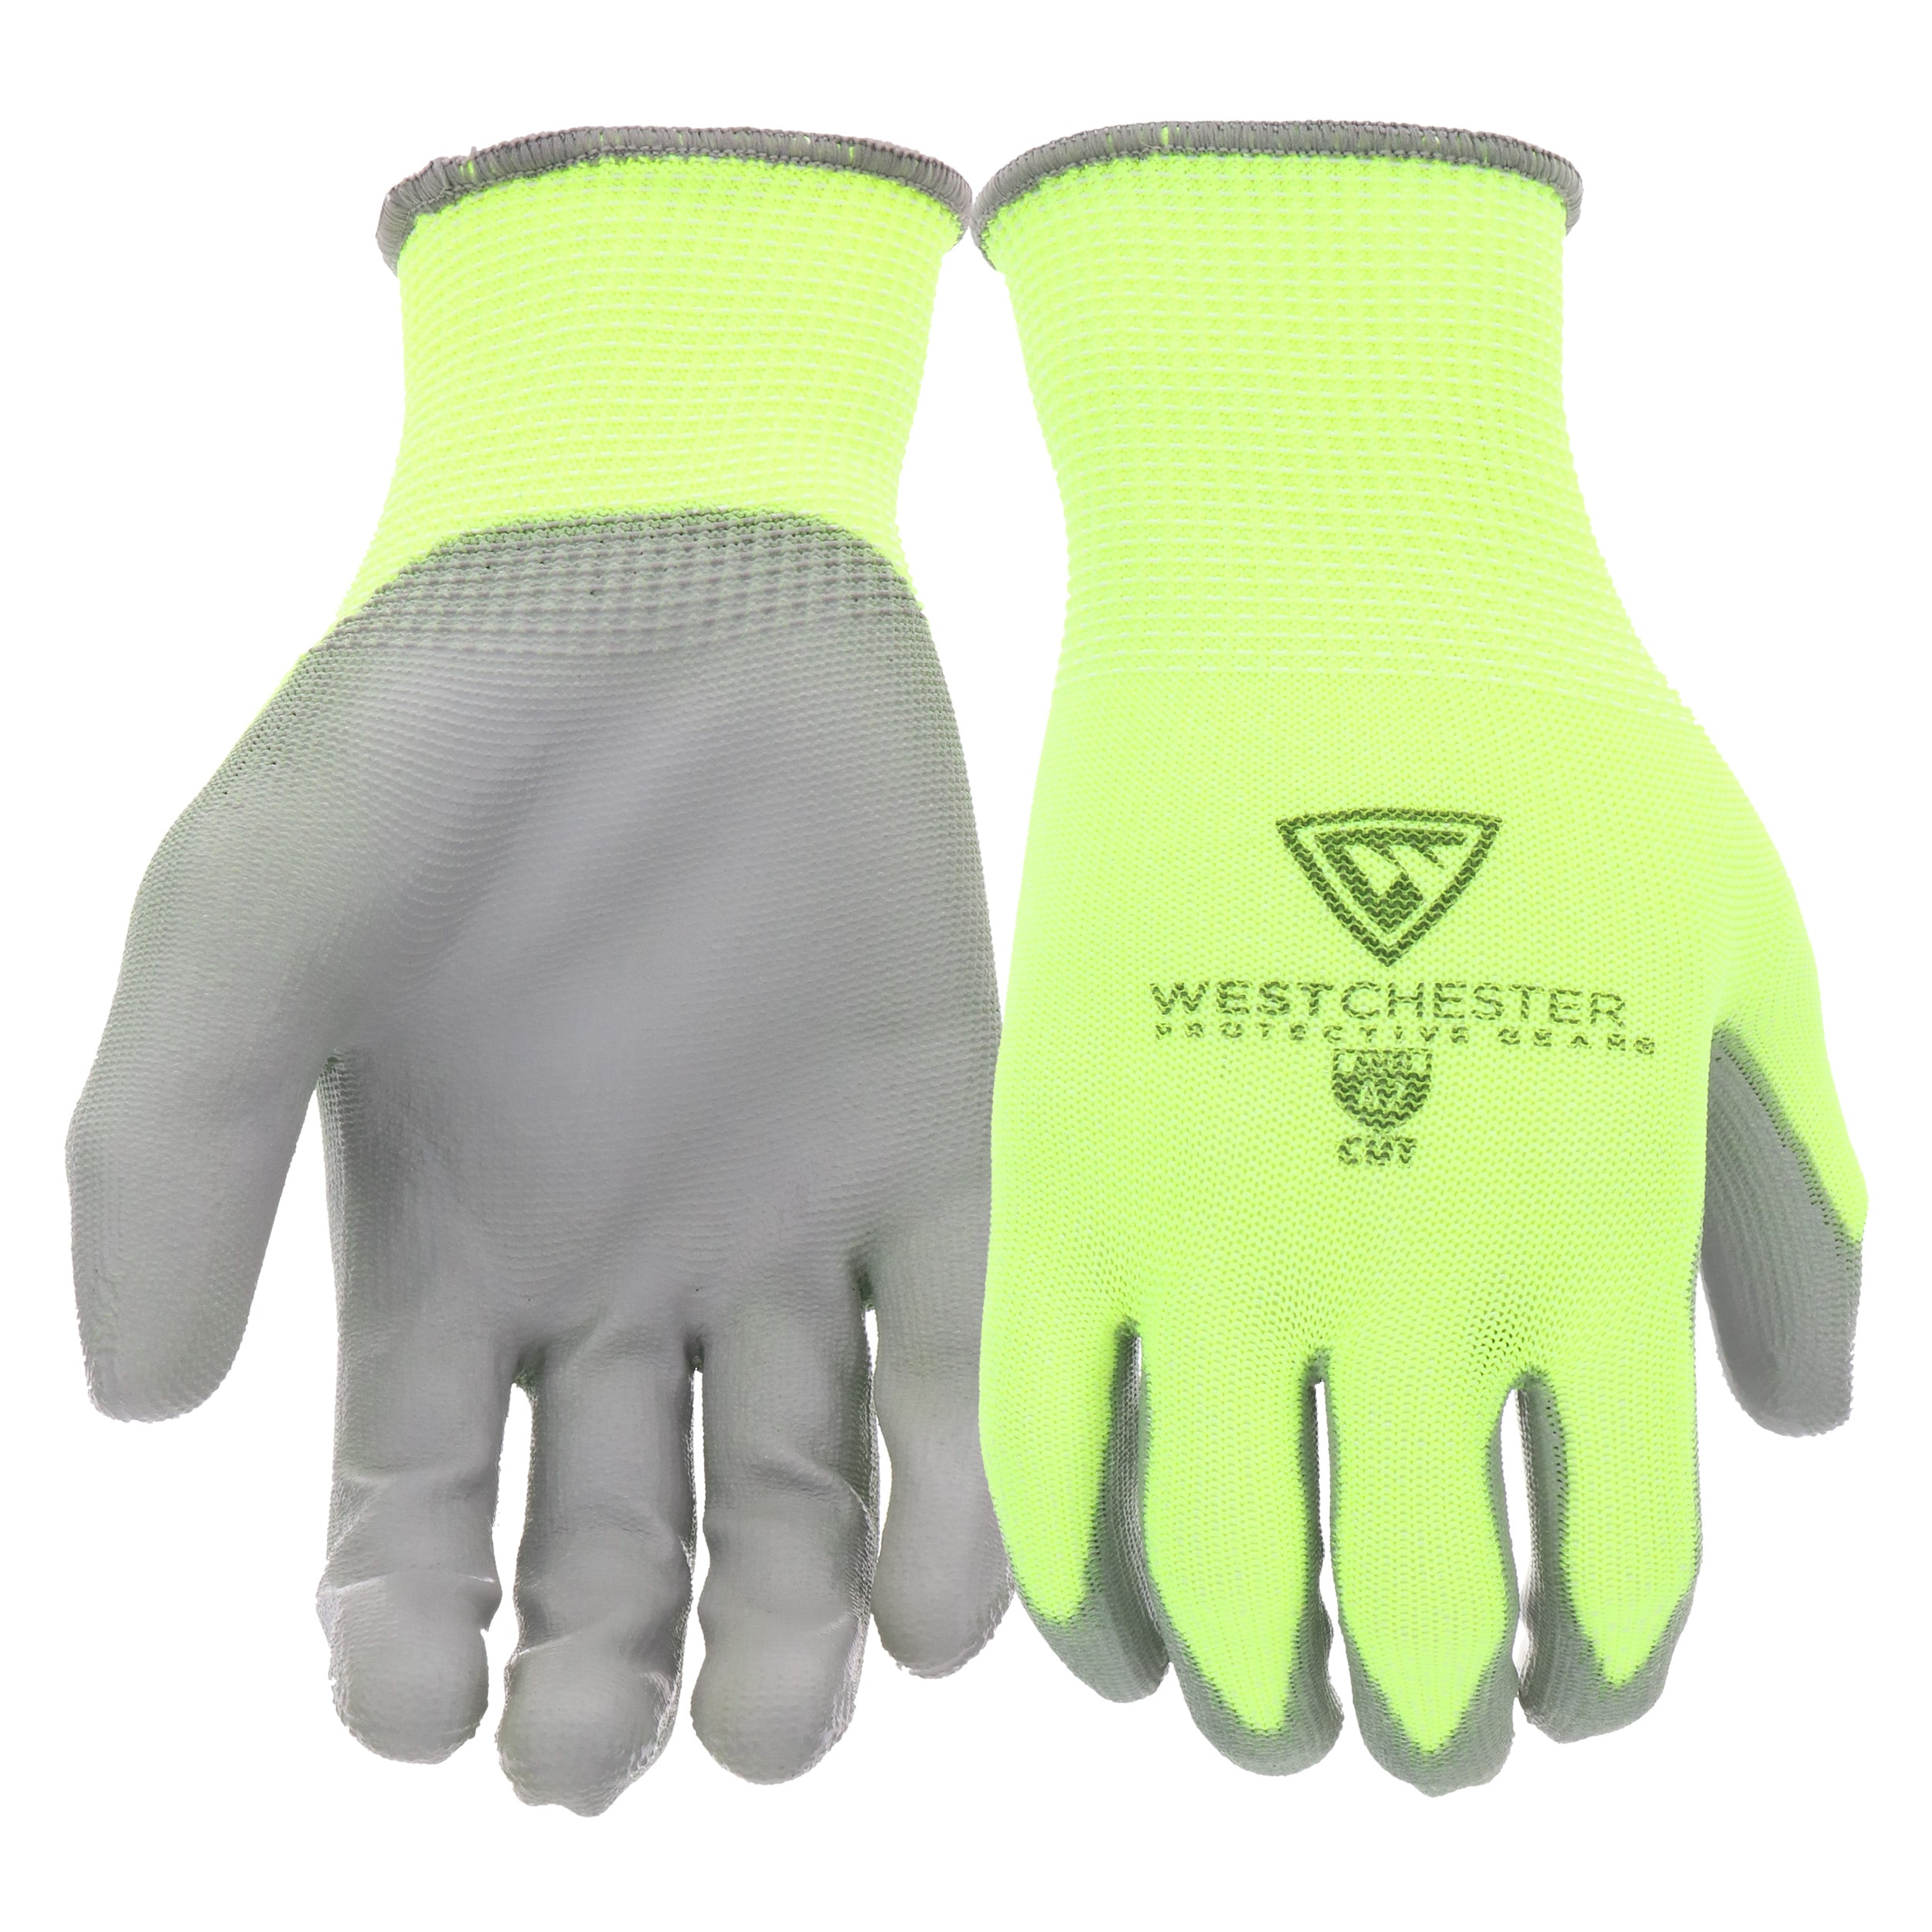 Black LINCONSON 25 Pack Ultimate Grip Construction Mechanic Work Gloves PU Coated Accessories Gloves & Mittens Gardening & Work Gloves 